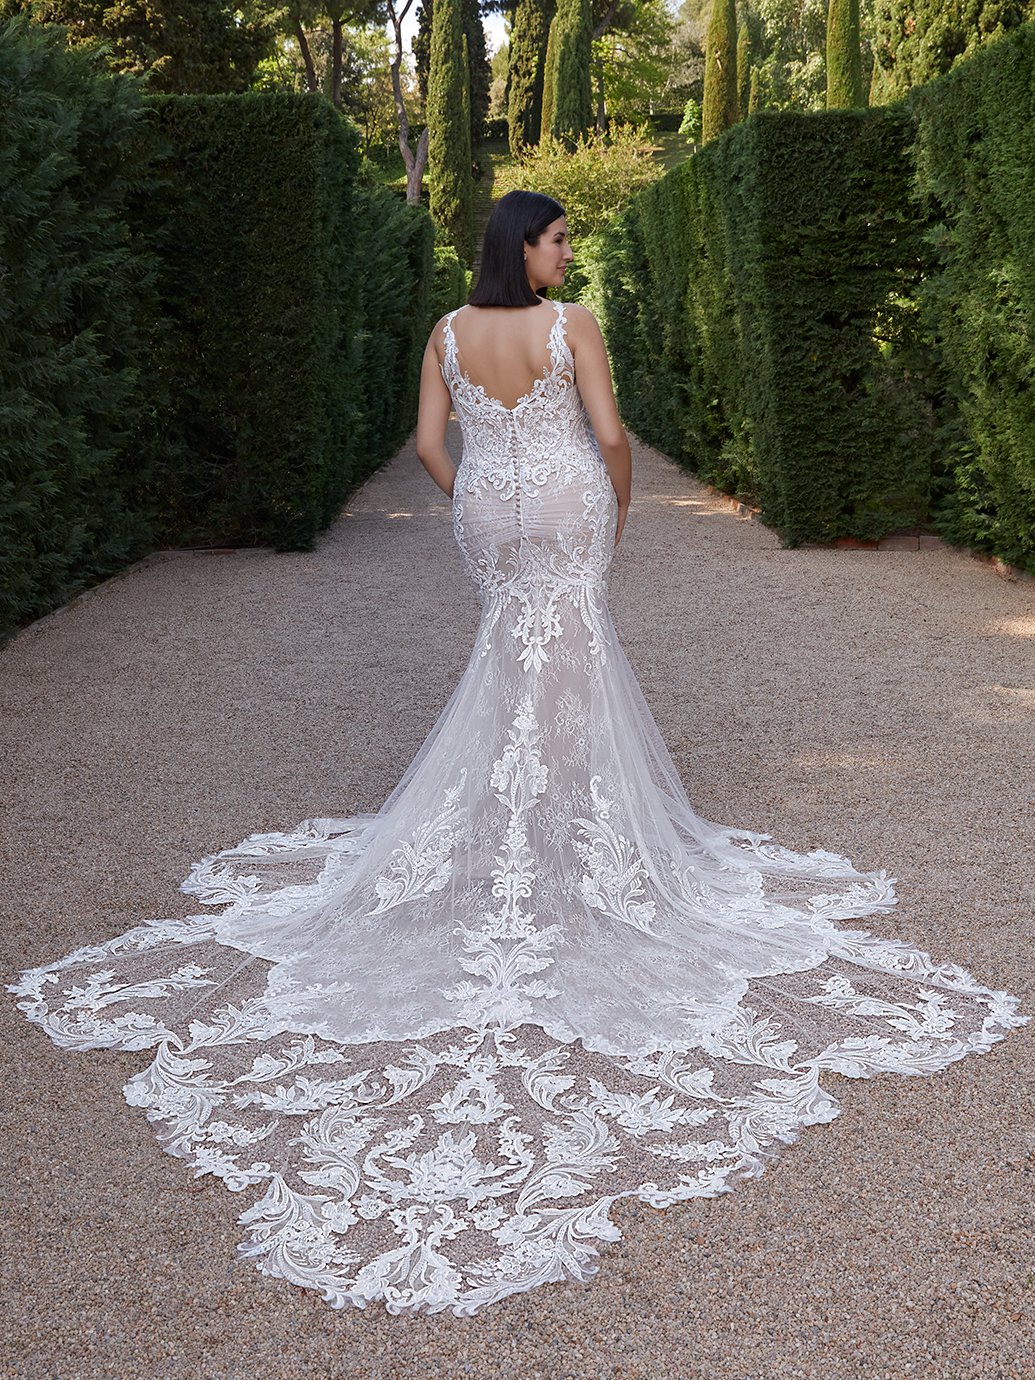 blanc-de-blanc-bridal-boutique-cleveland-dress-wedding-gown-elysee-edition-valliere.jpg